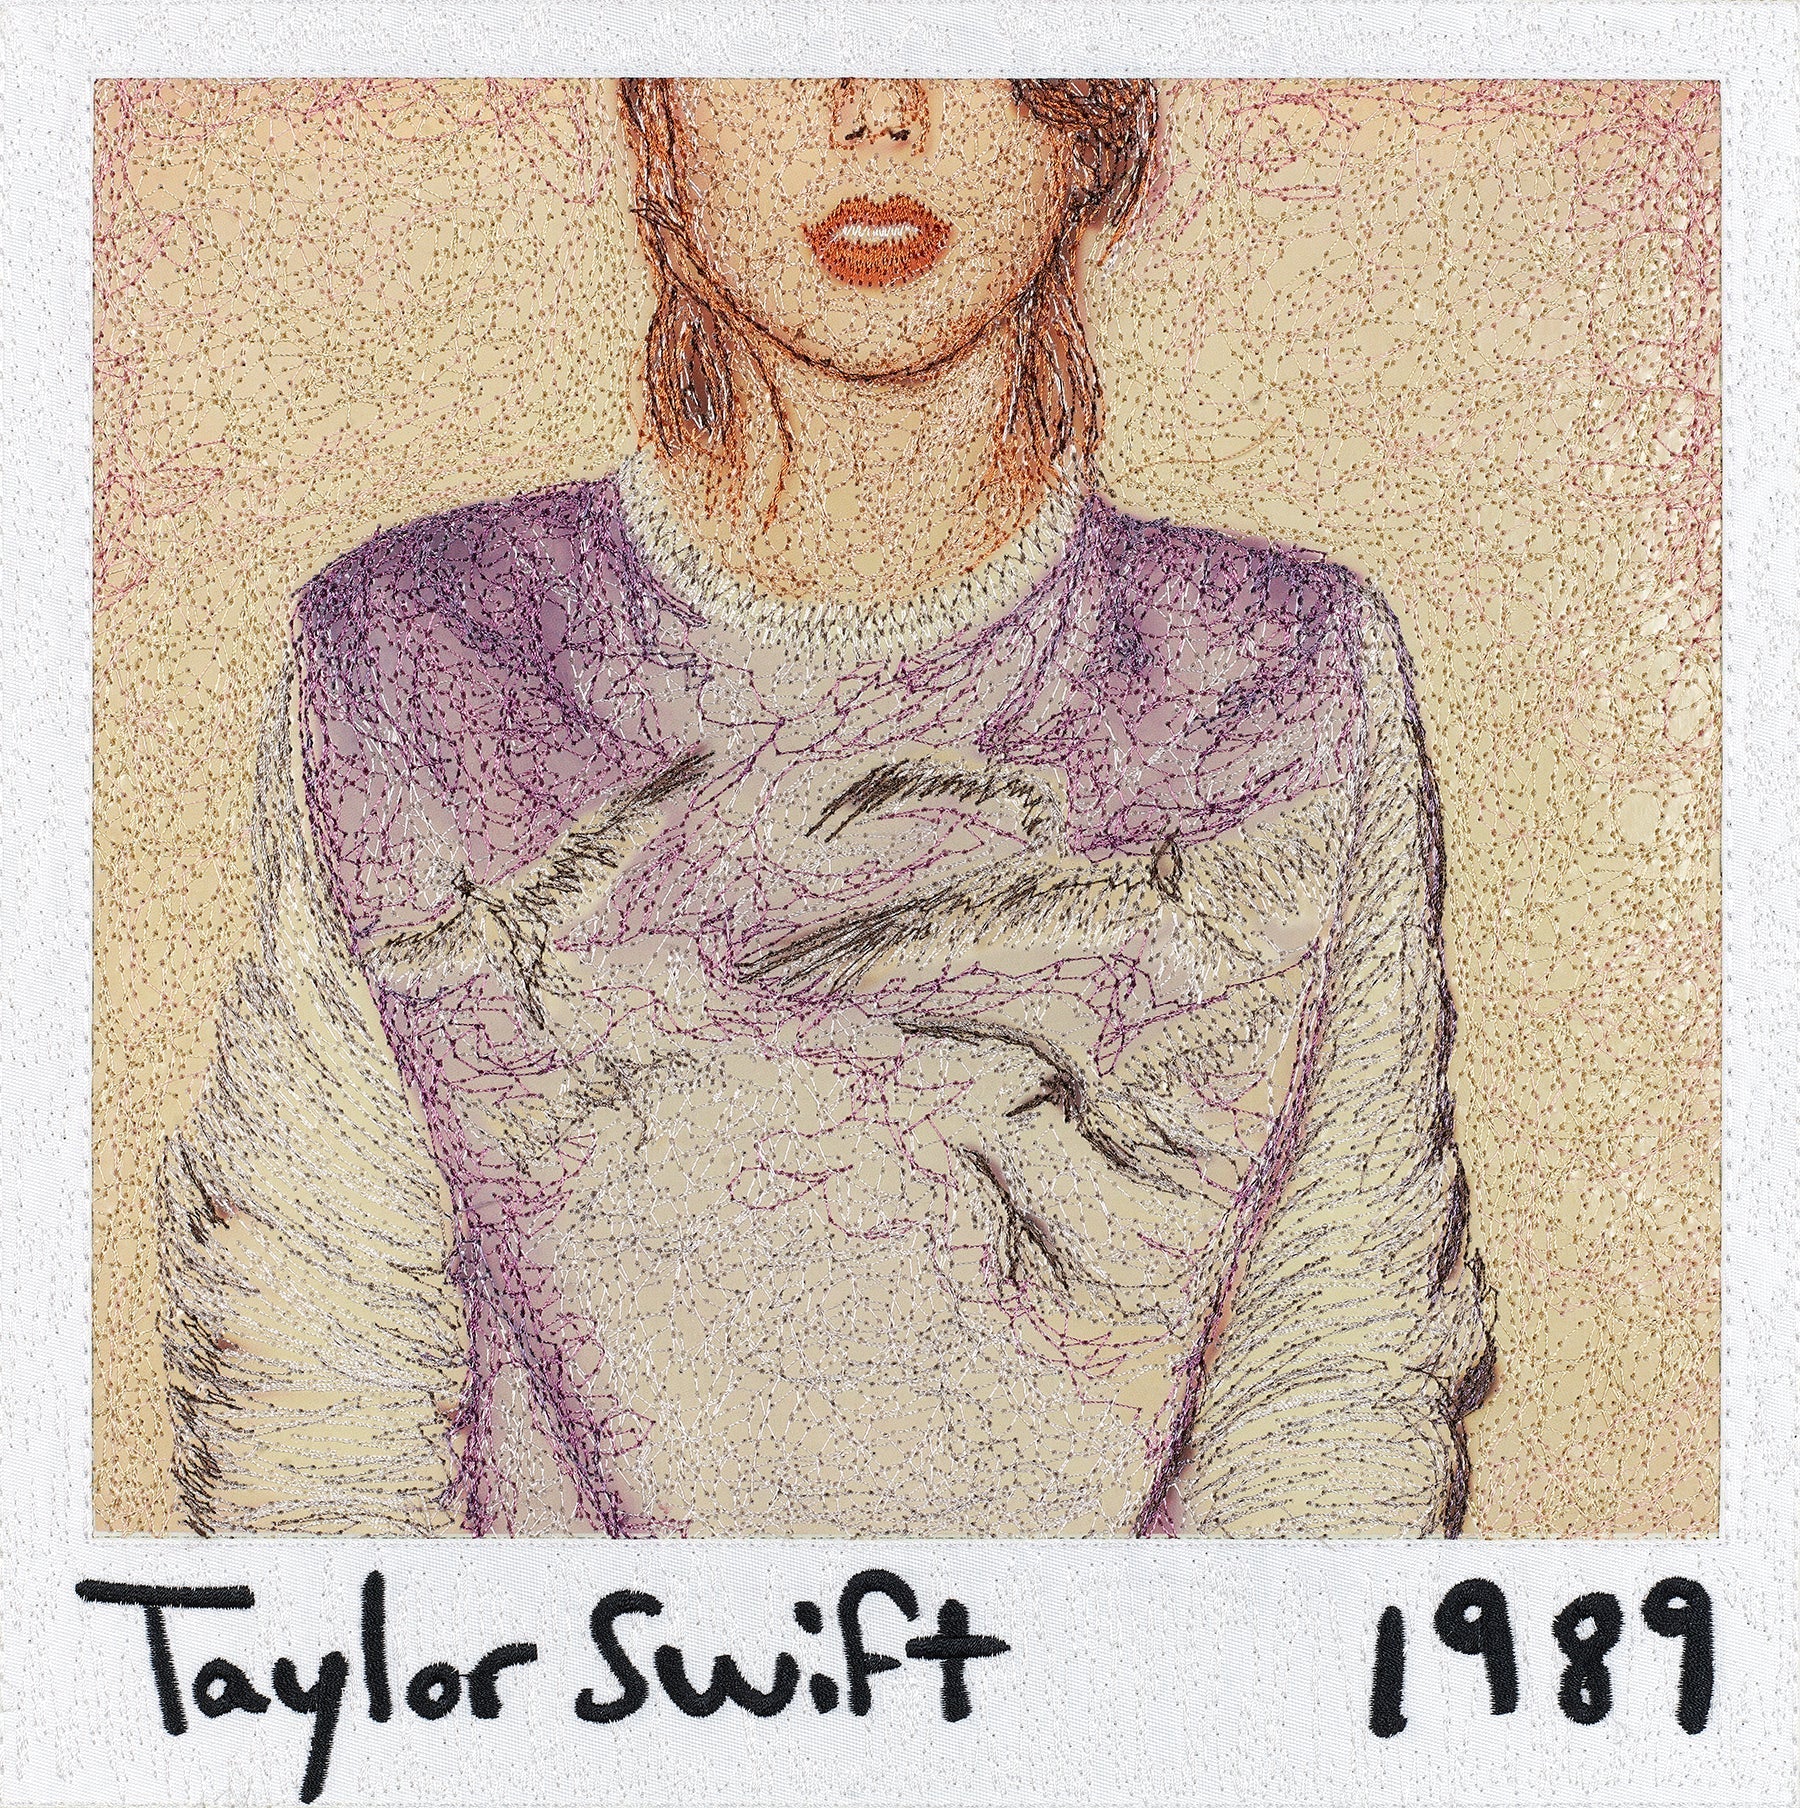 TAYLOR SWIFT 1989